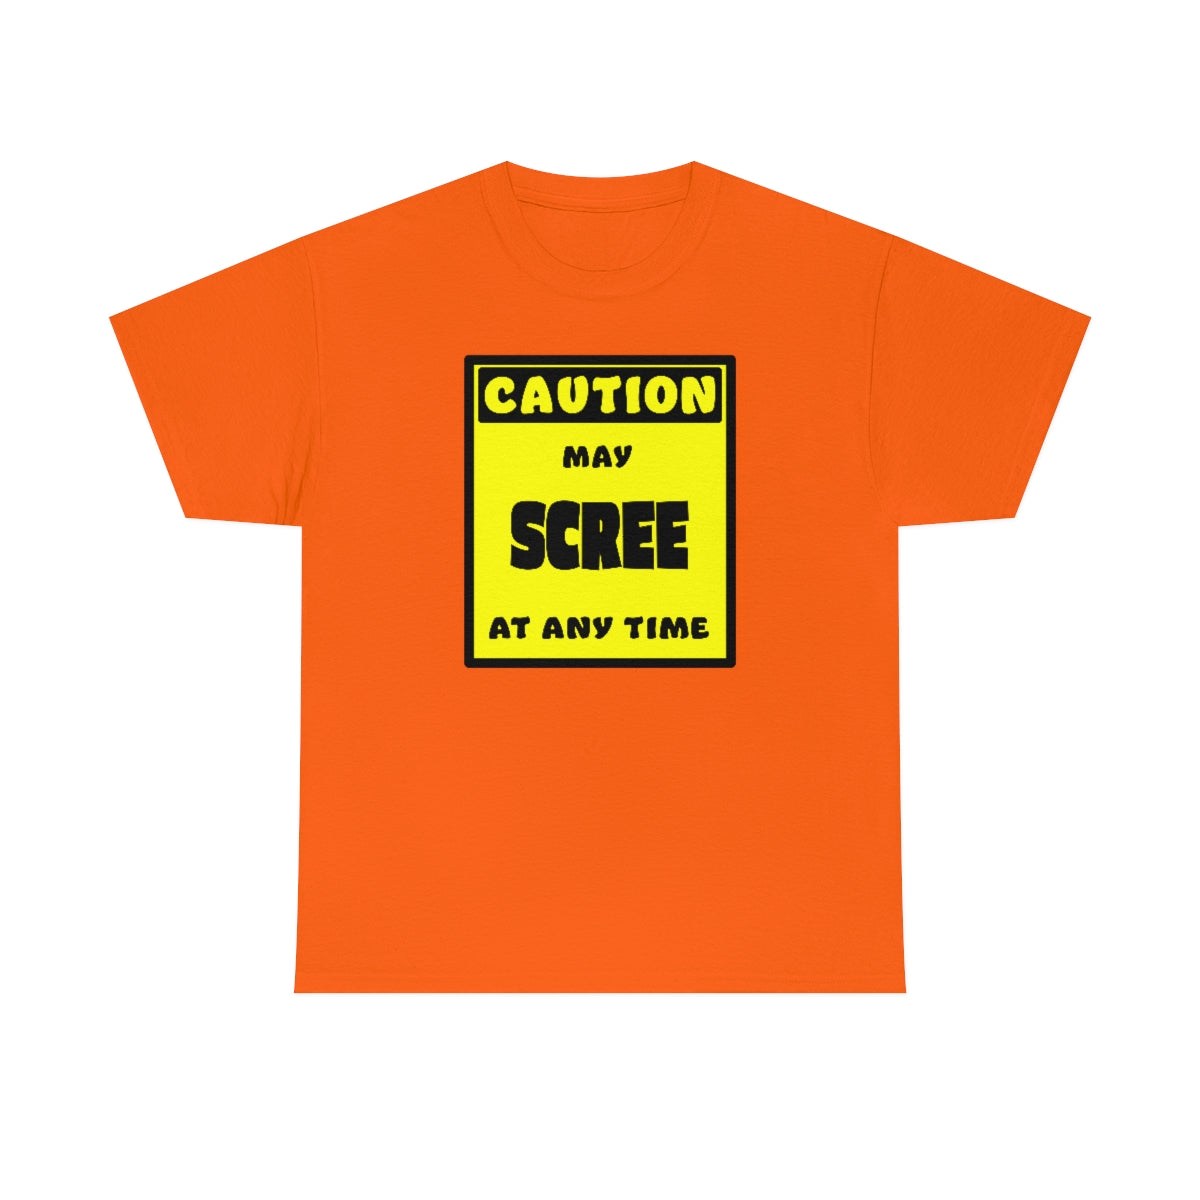 CAUTION! May SCREE at any time! - T-Shirt